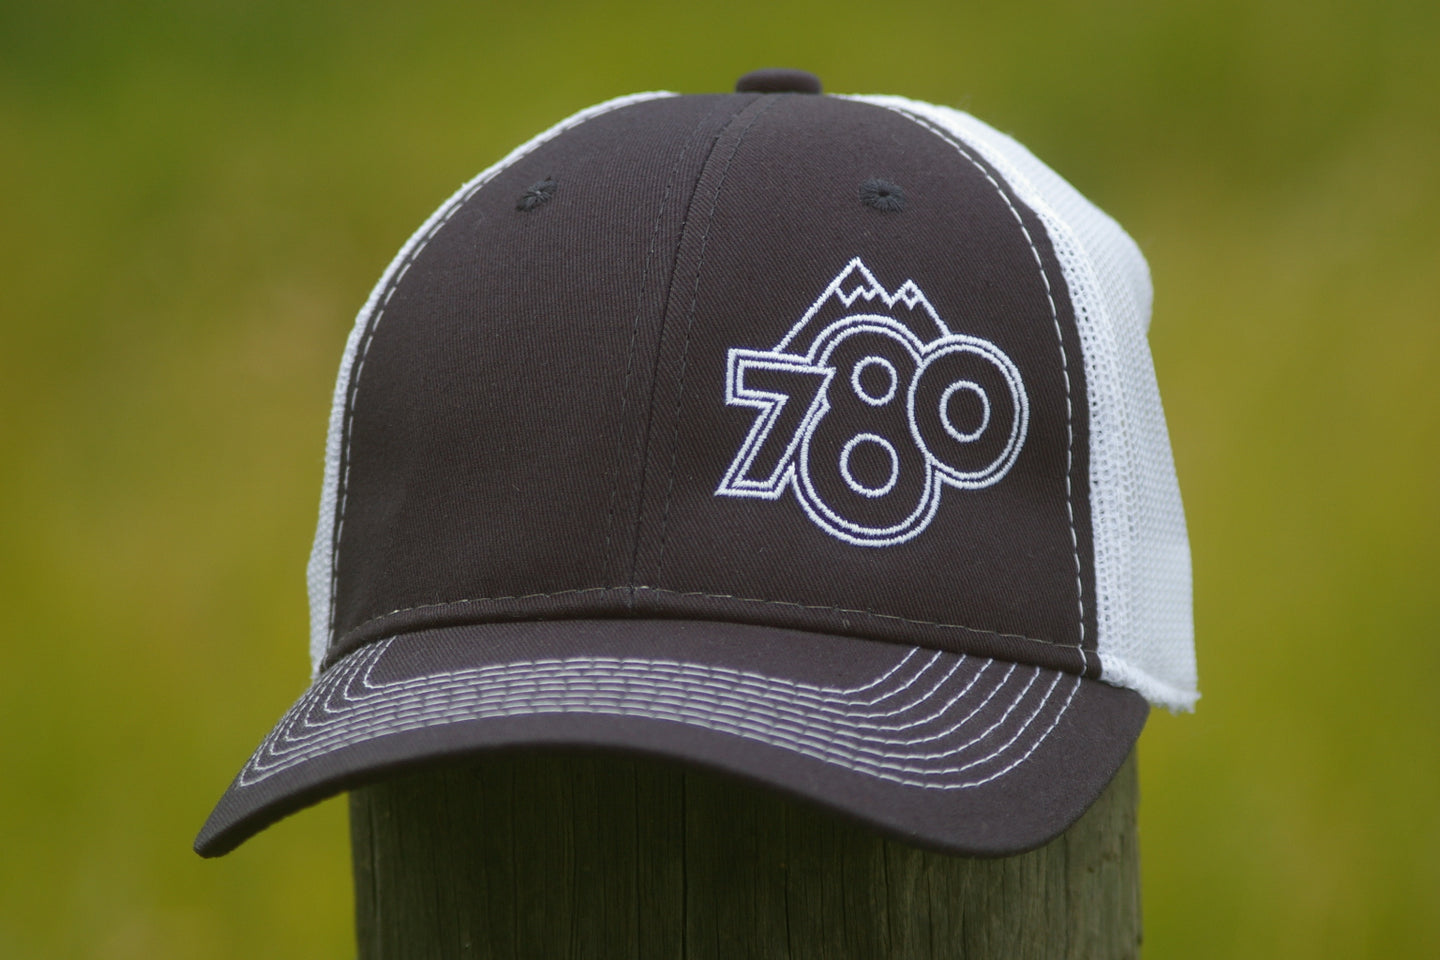 Classic 780 Clothing Company hat - Navy